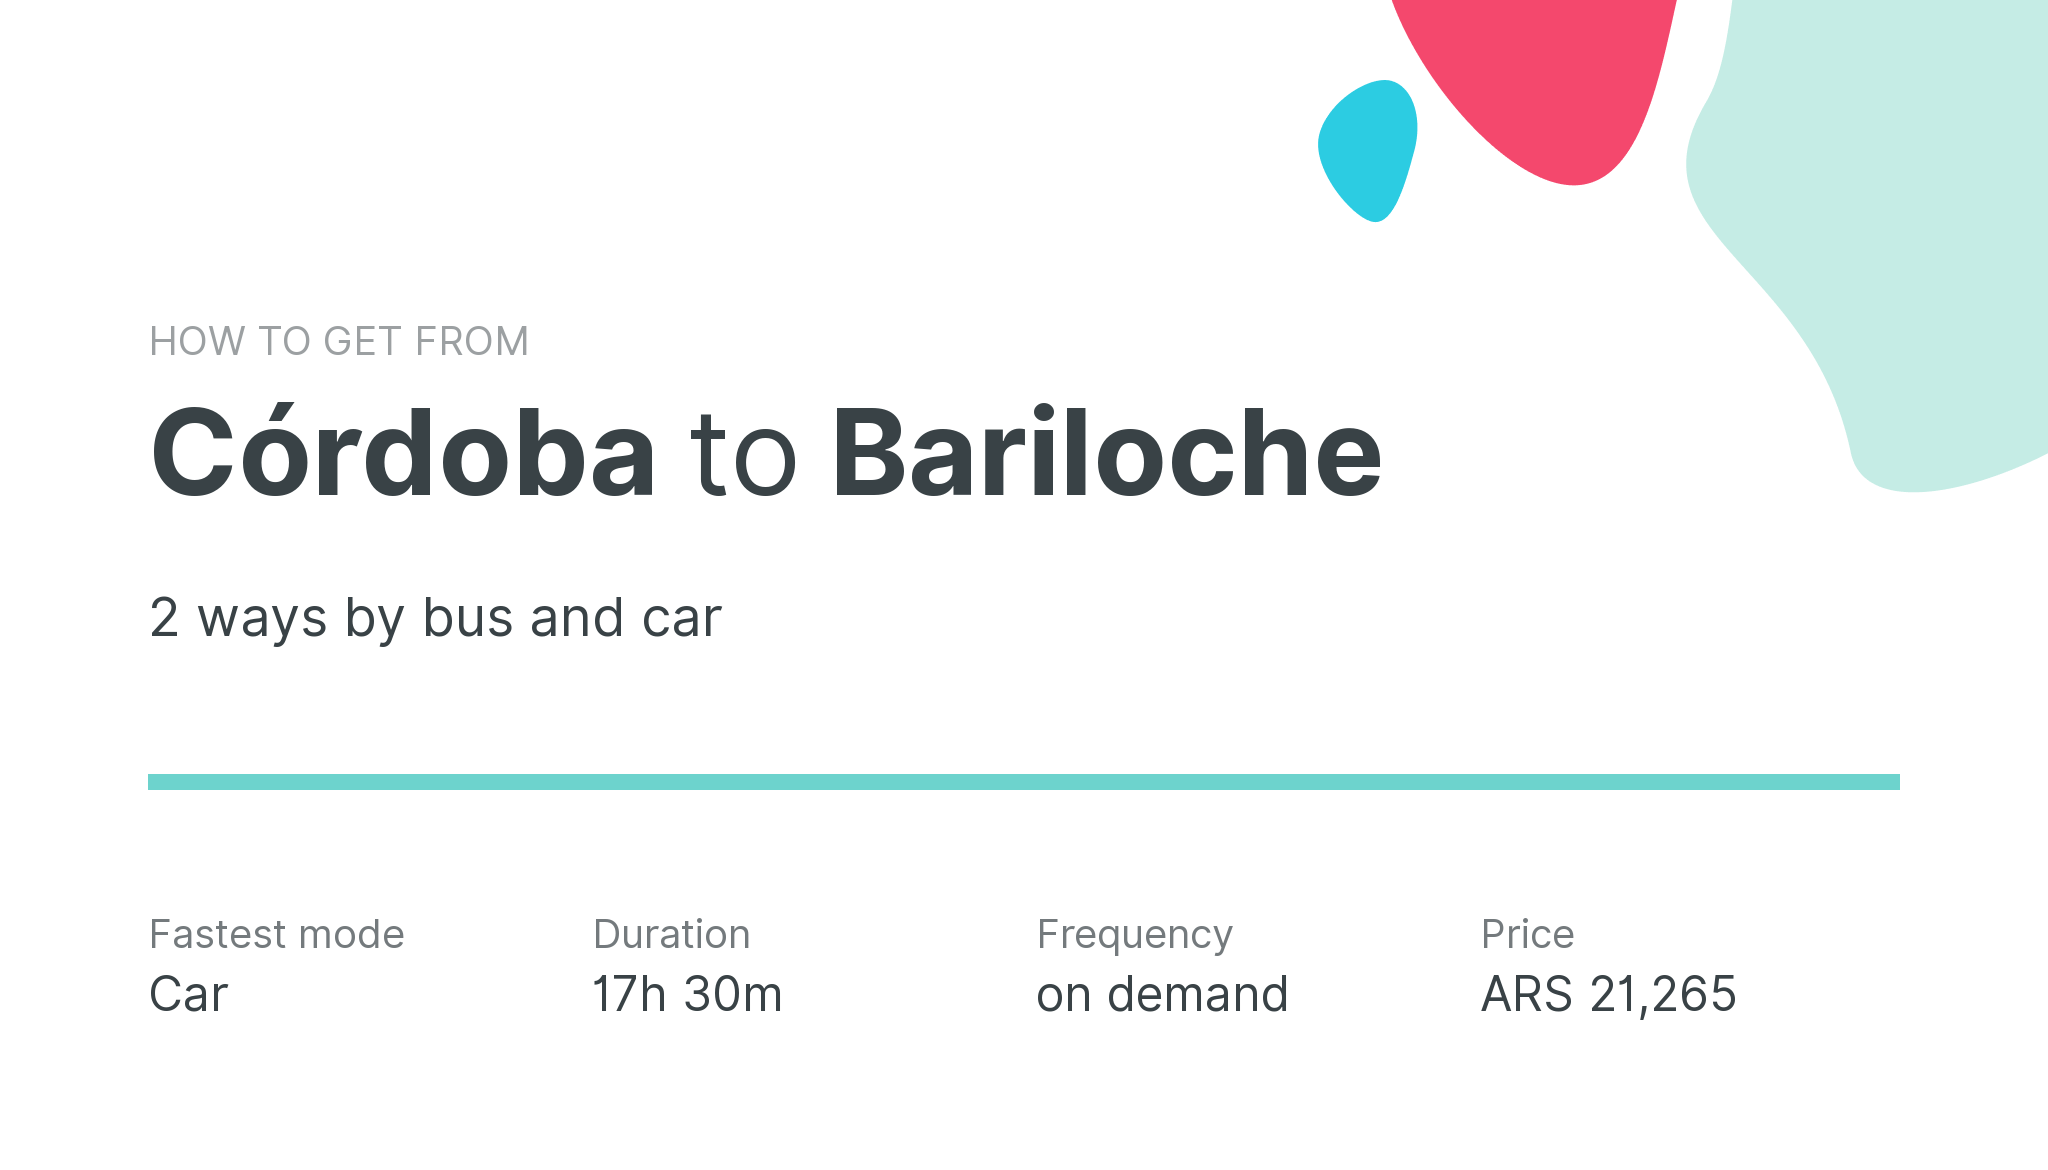 How do I get from Córdoba to Bariloche